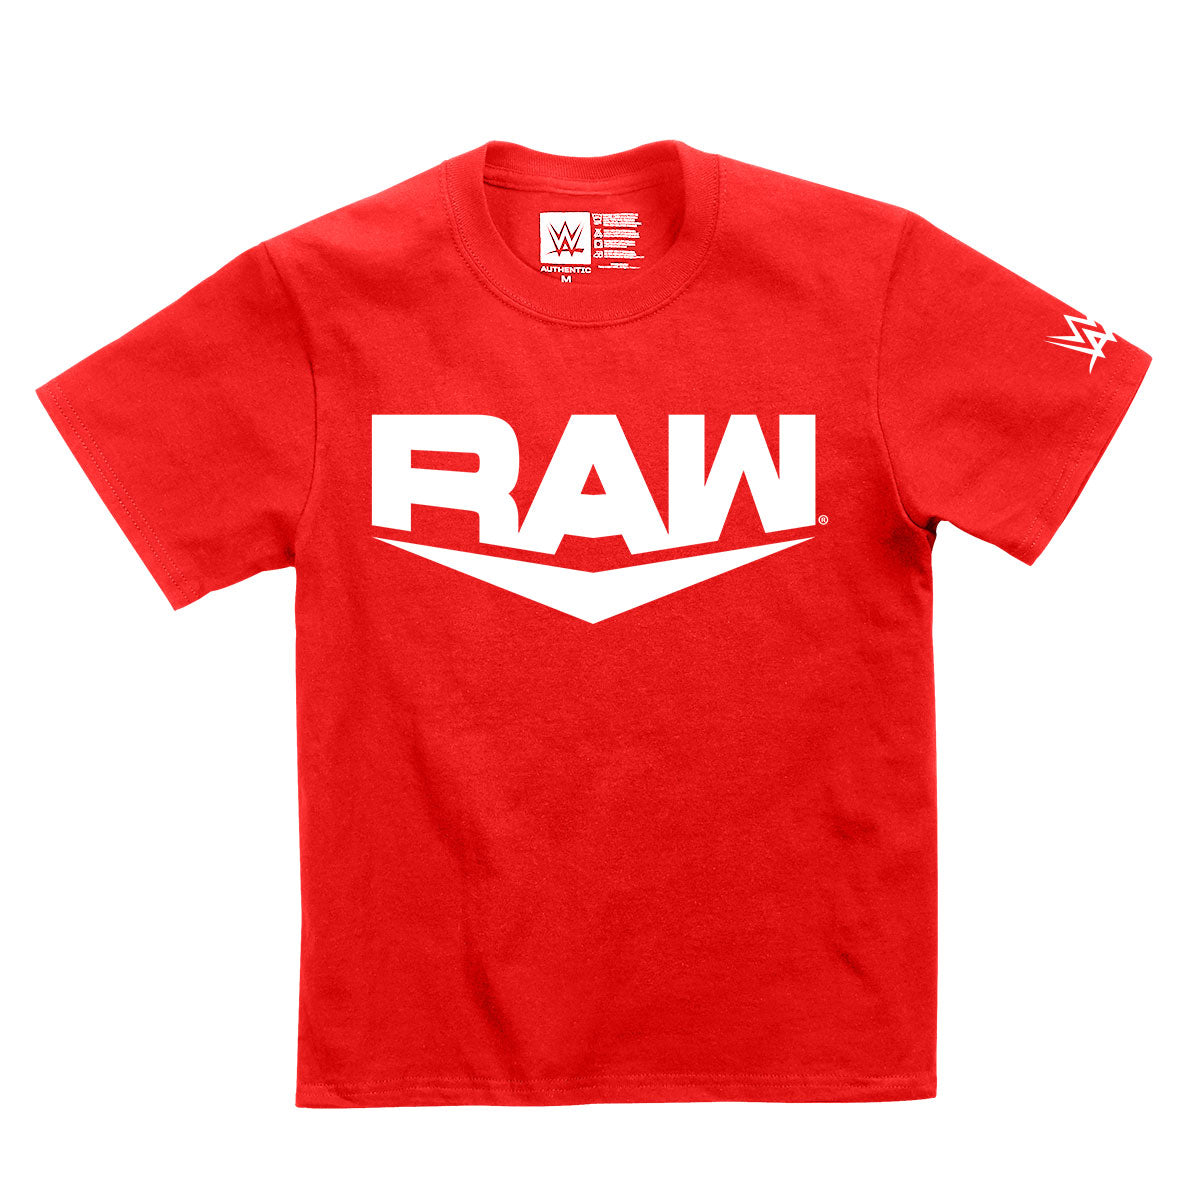 RAW 2019 Draft Youth T-Shirt